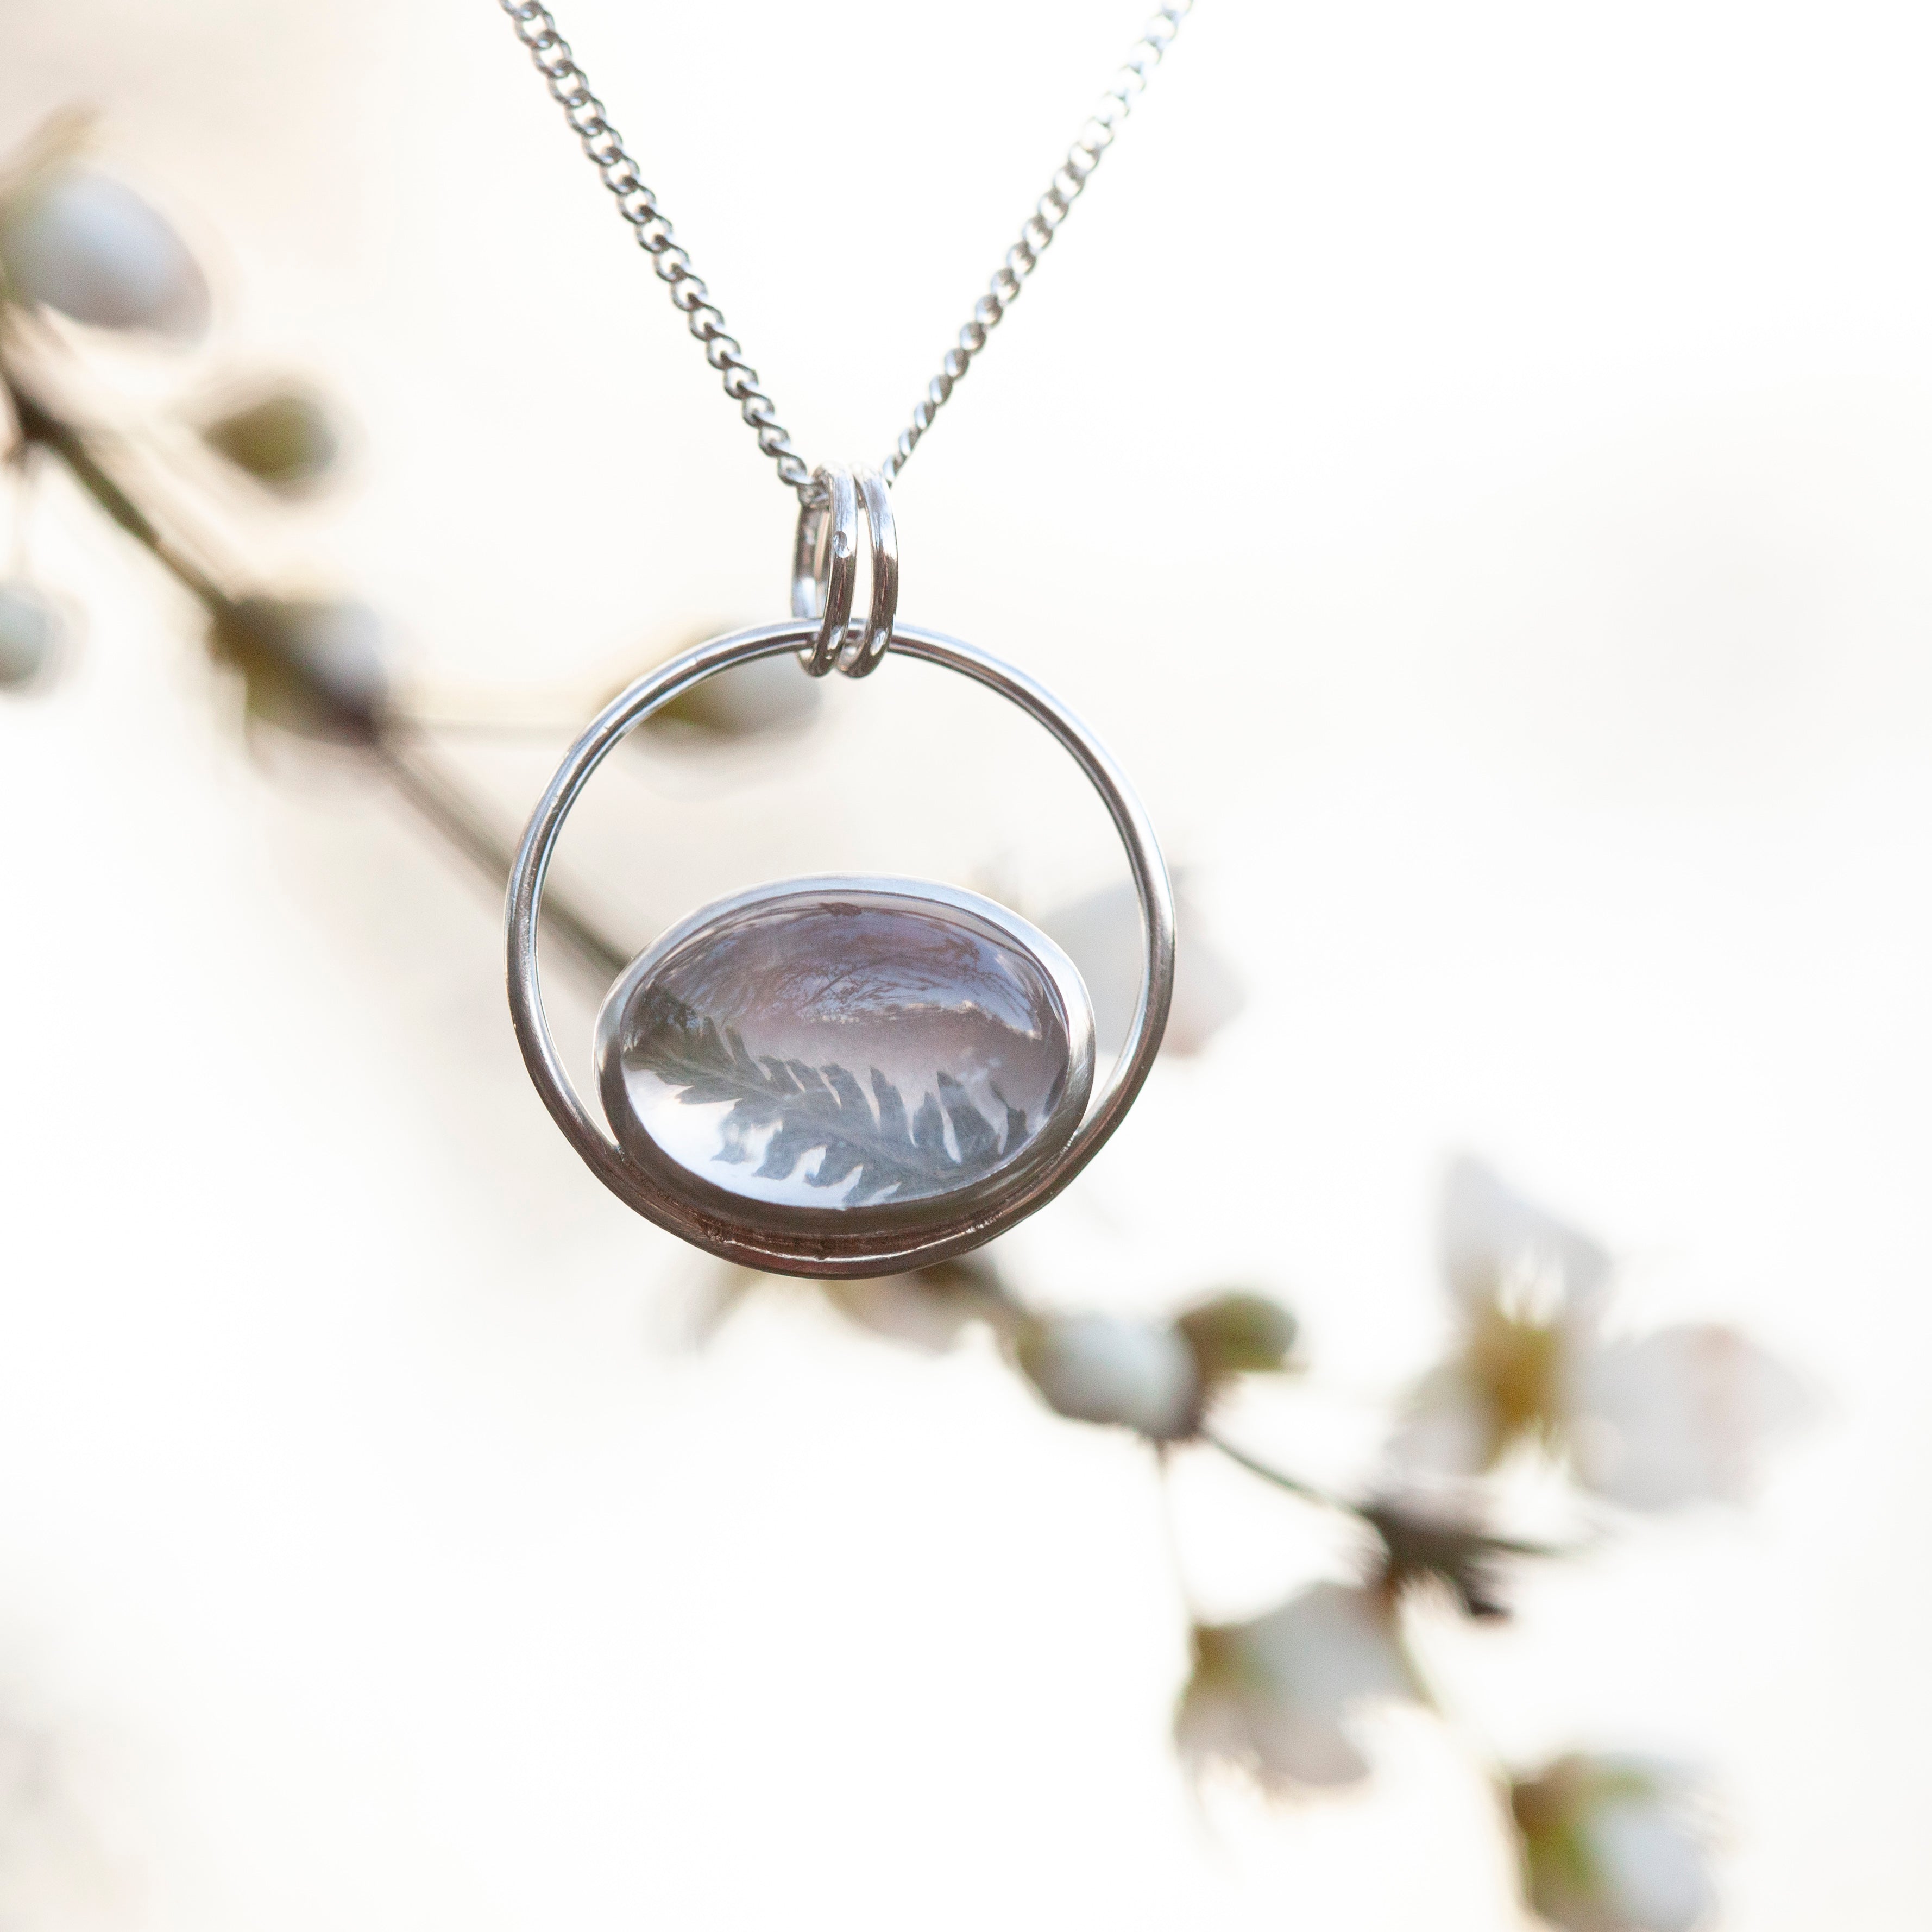 OOAK pendant with captured plant #2 • rose quartz   (ready to ship)